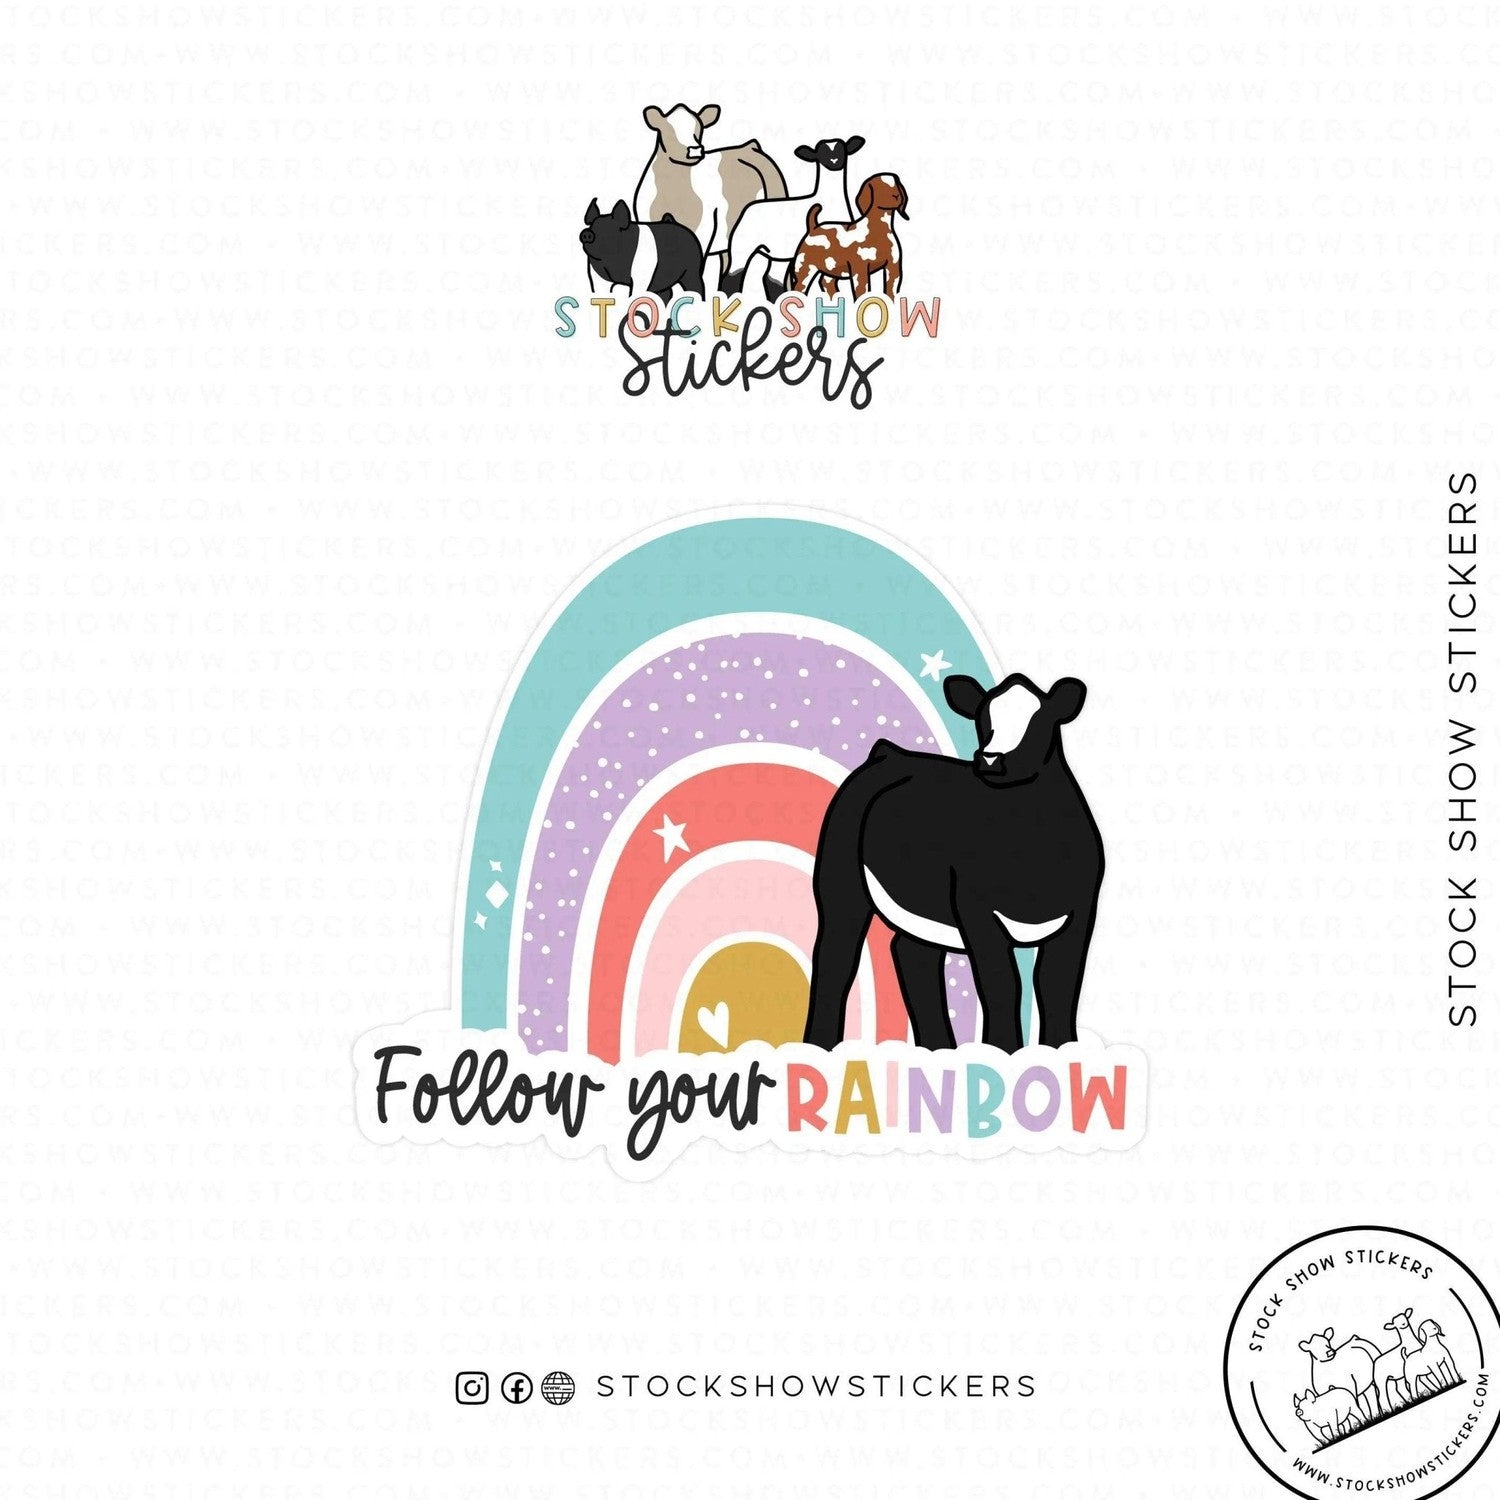 Custom Made Follow Your Rainbow Livestock Stickers Stock Show Livestock - Livestock &amp; Co. Boutique